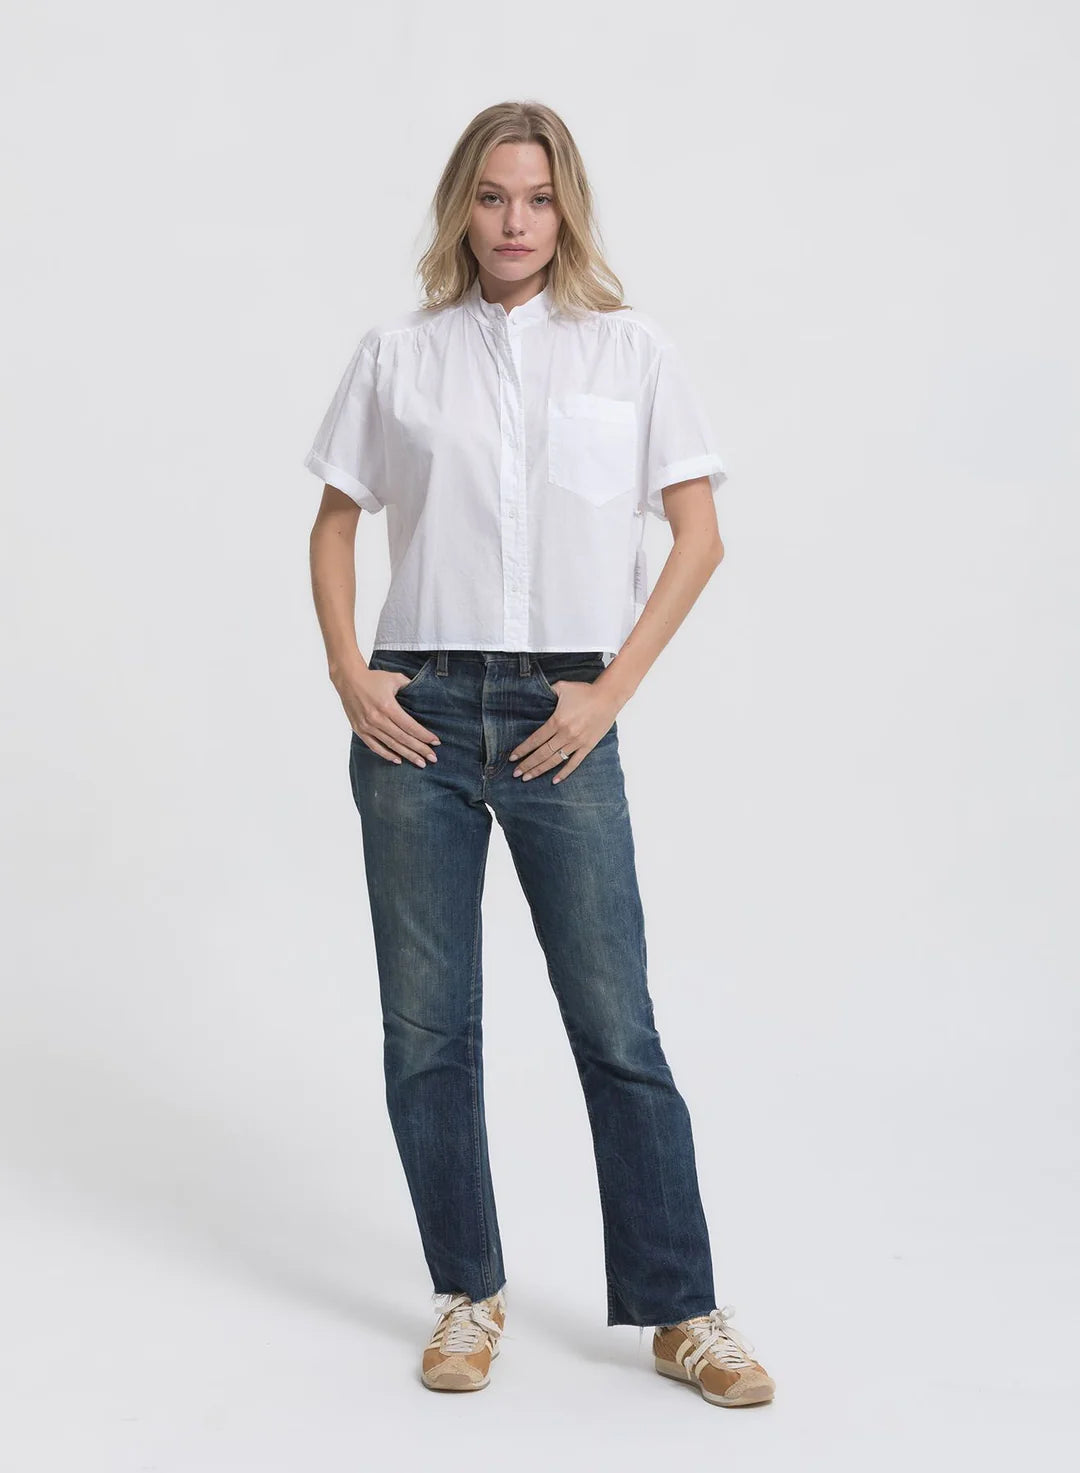 Cali Dreaming Louelle Shirt, button down shirt, blouse, shirt, women's clothing